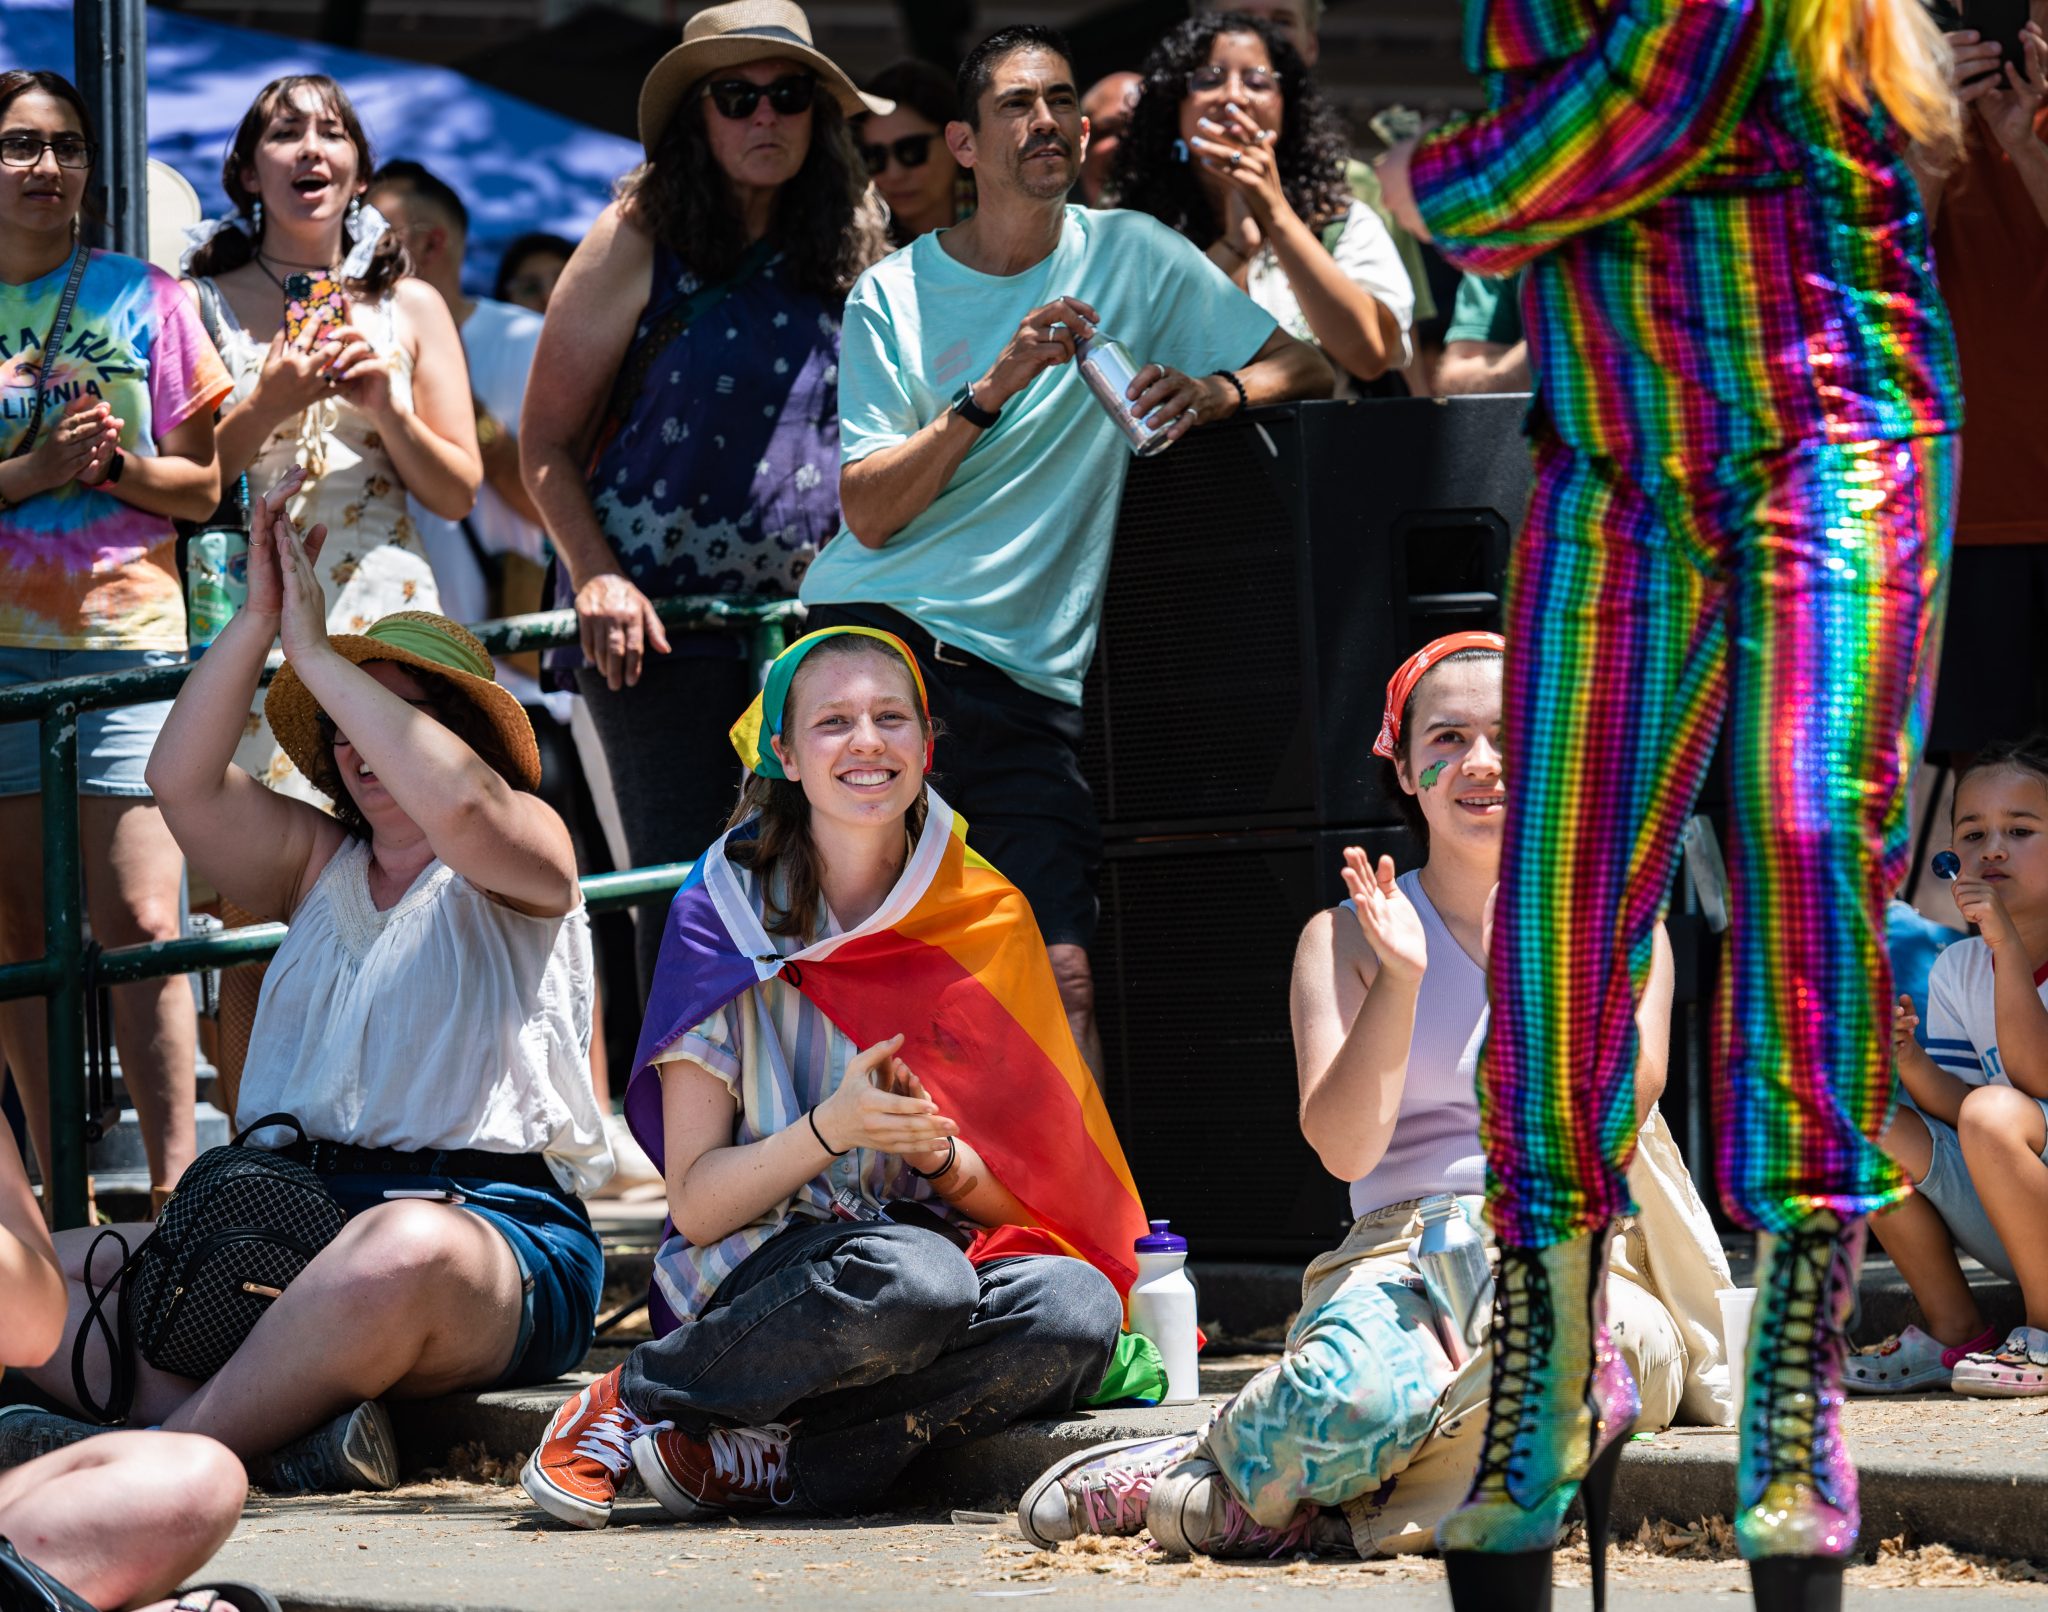 girl with rainbow flag, cape, davis pride, davis, california, pride month, gay community, event, chris allan, freelance photojournalist, news photography, lgbtq, event, colorful